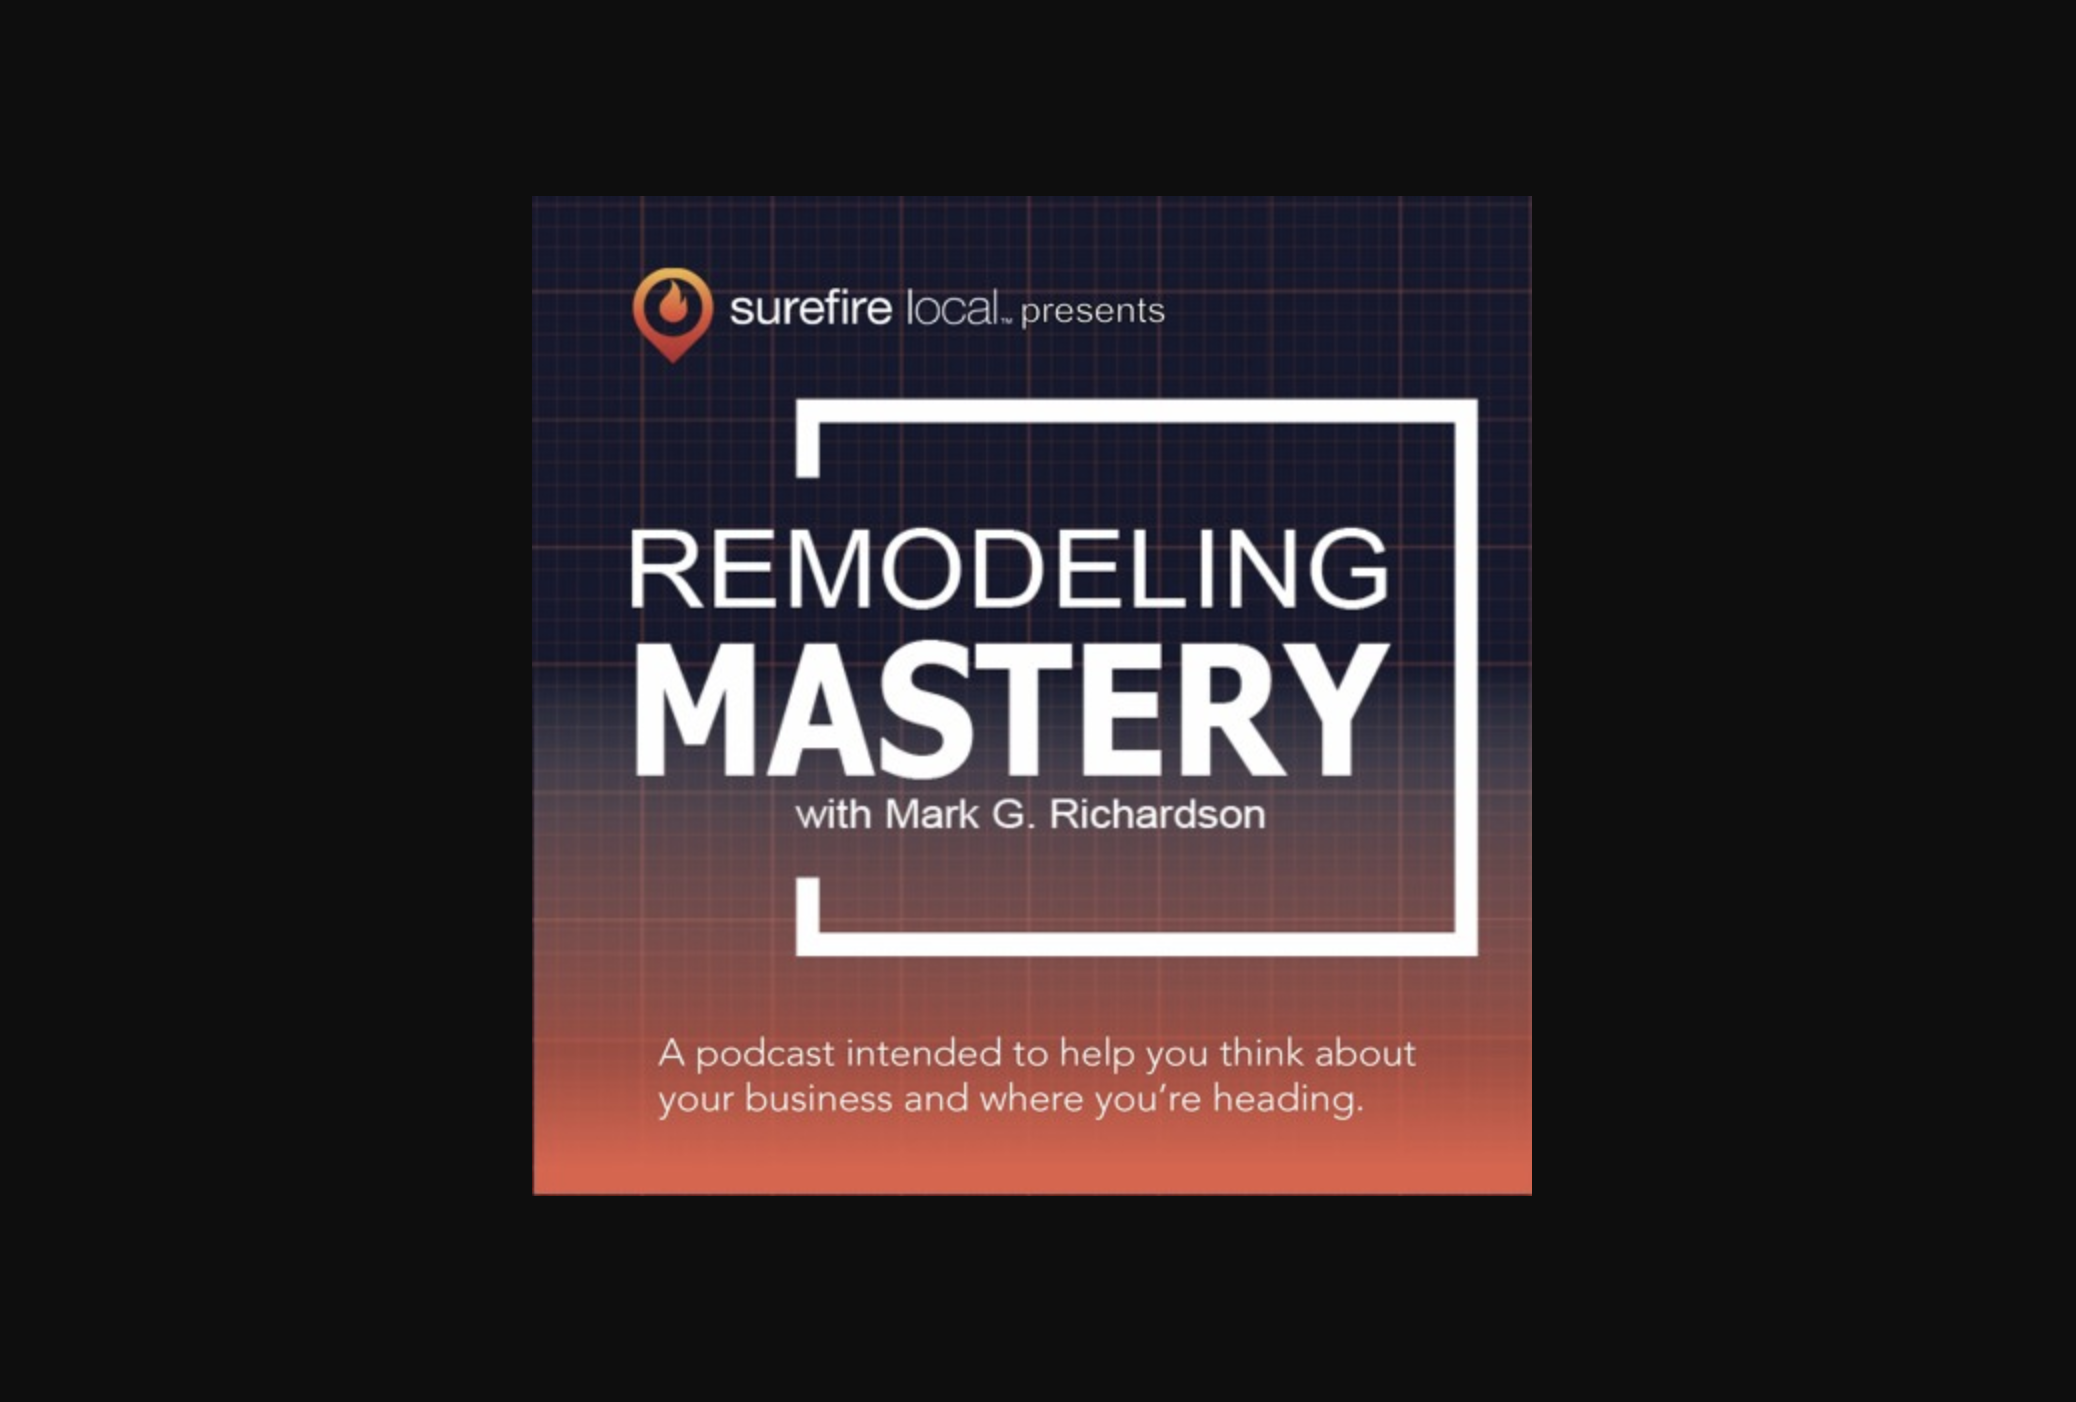 Remodeling Mastery with Mark Richardson